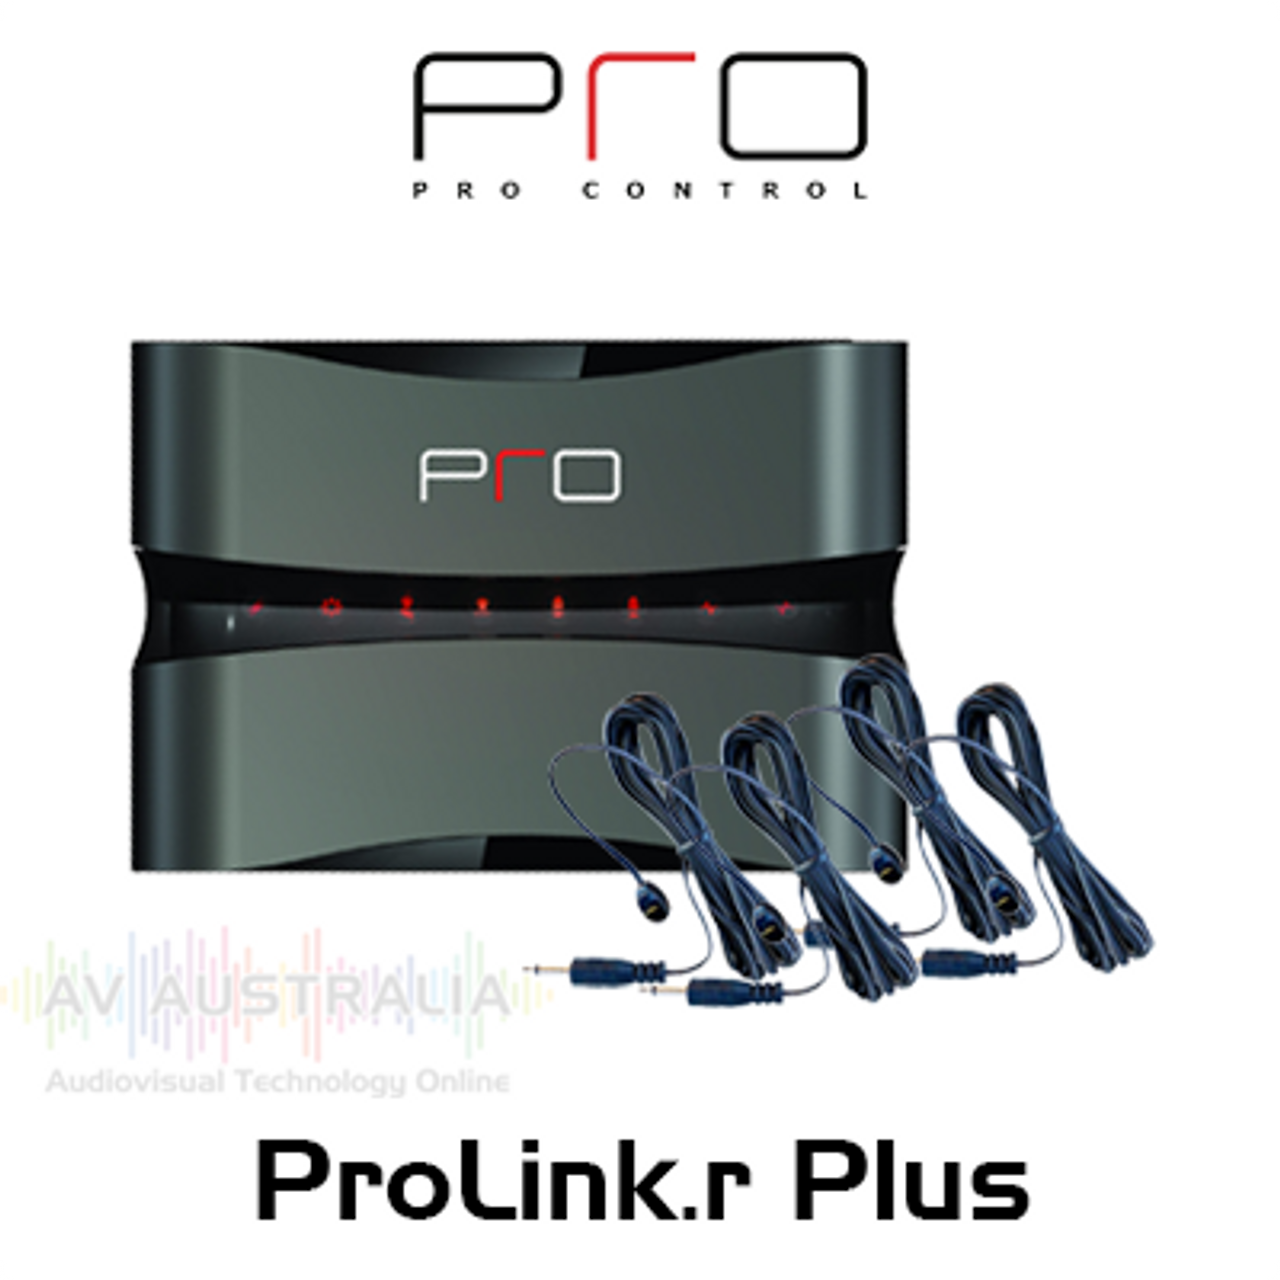 Pro Control ProLink.r Plus Processor with IR Emitters